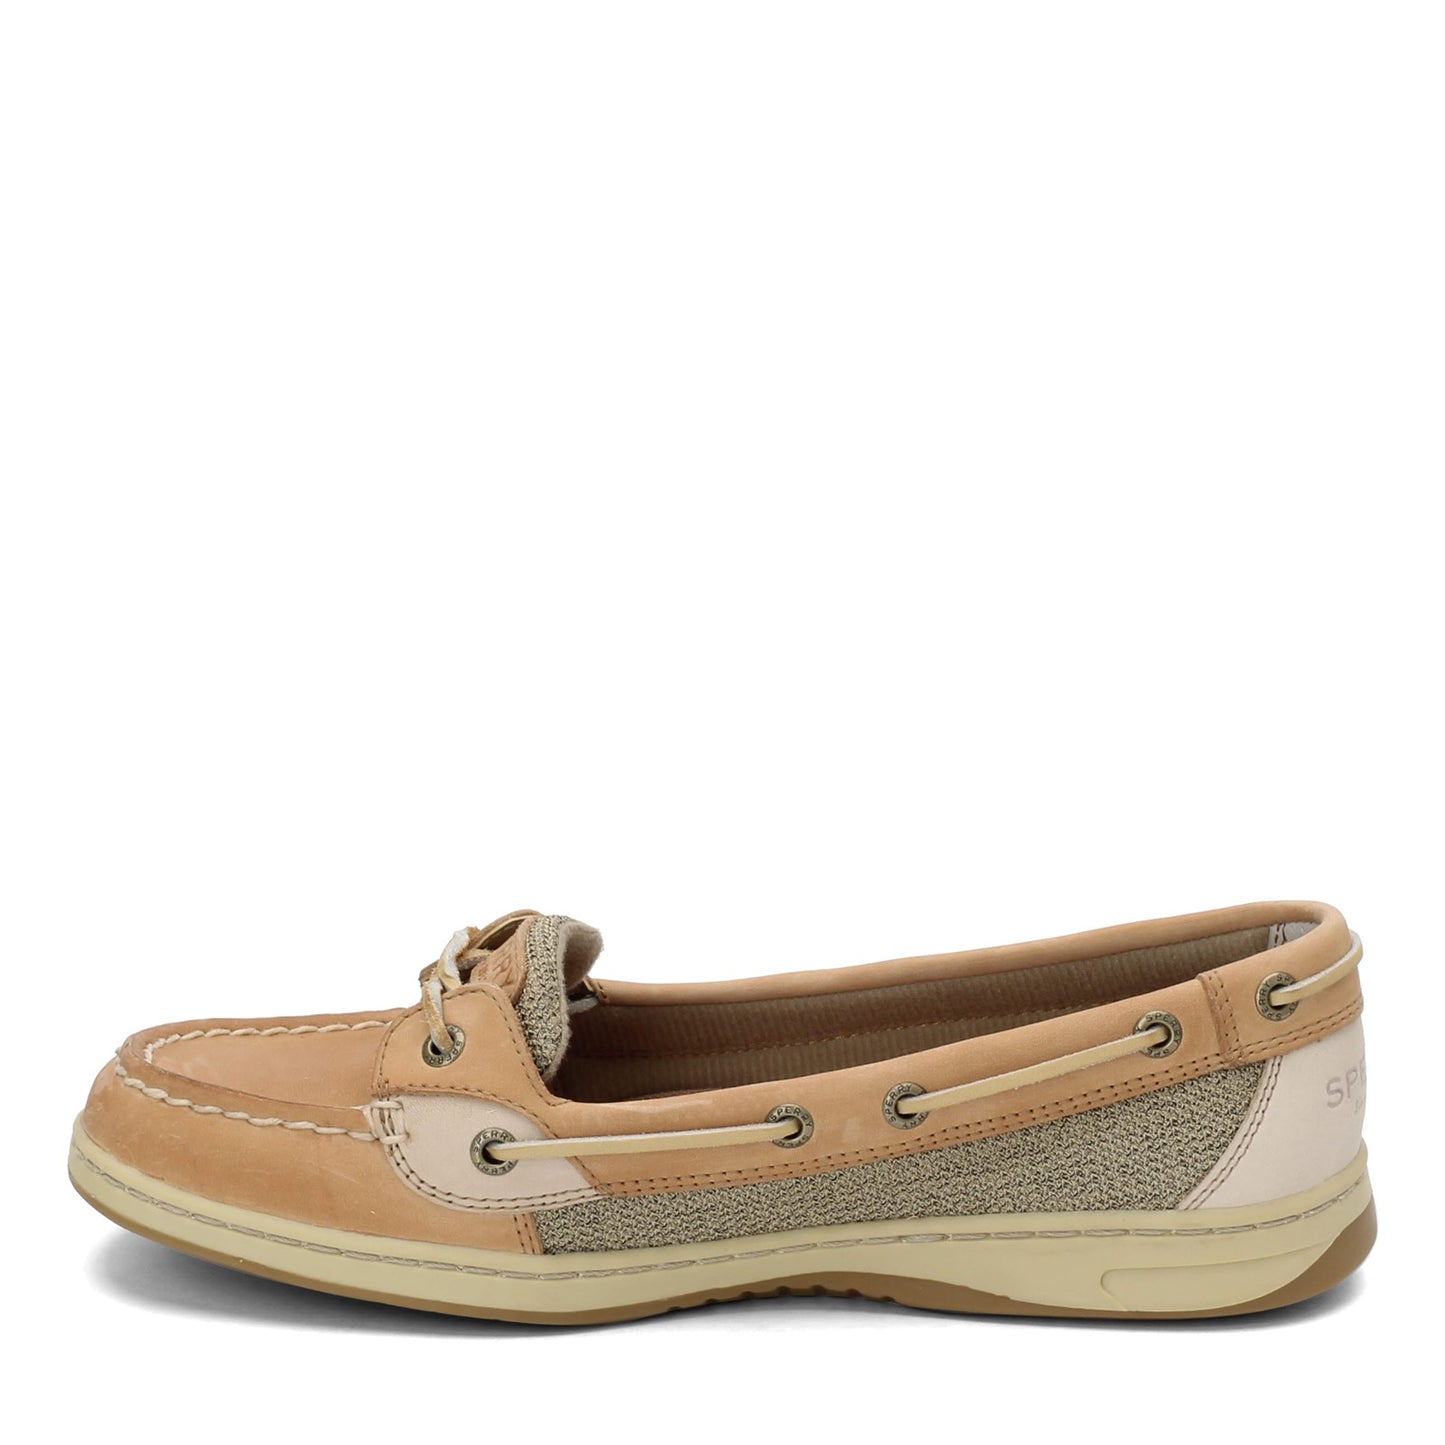 Peltz Shoes  Women's Sperry Angelfish Boat Shoe Linen/Oat 9102047